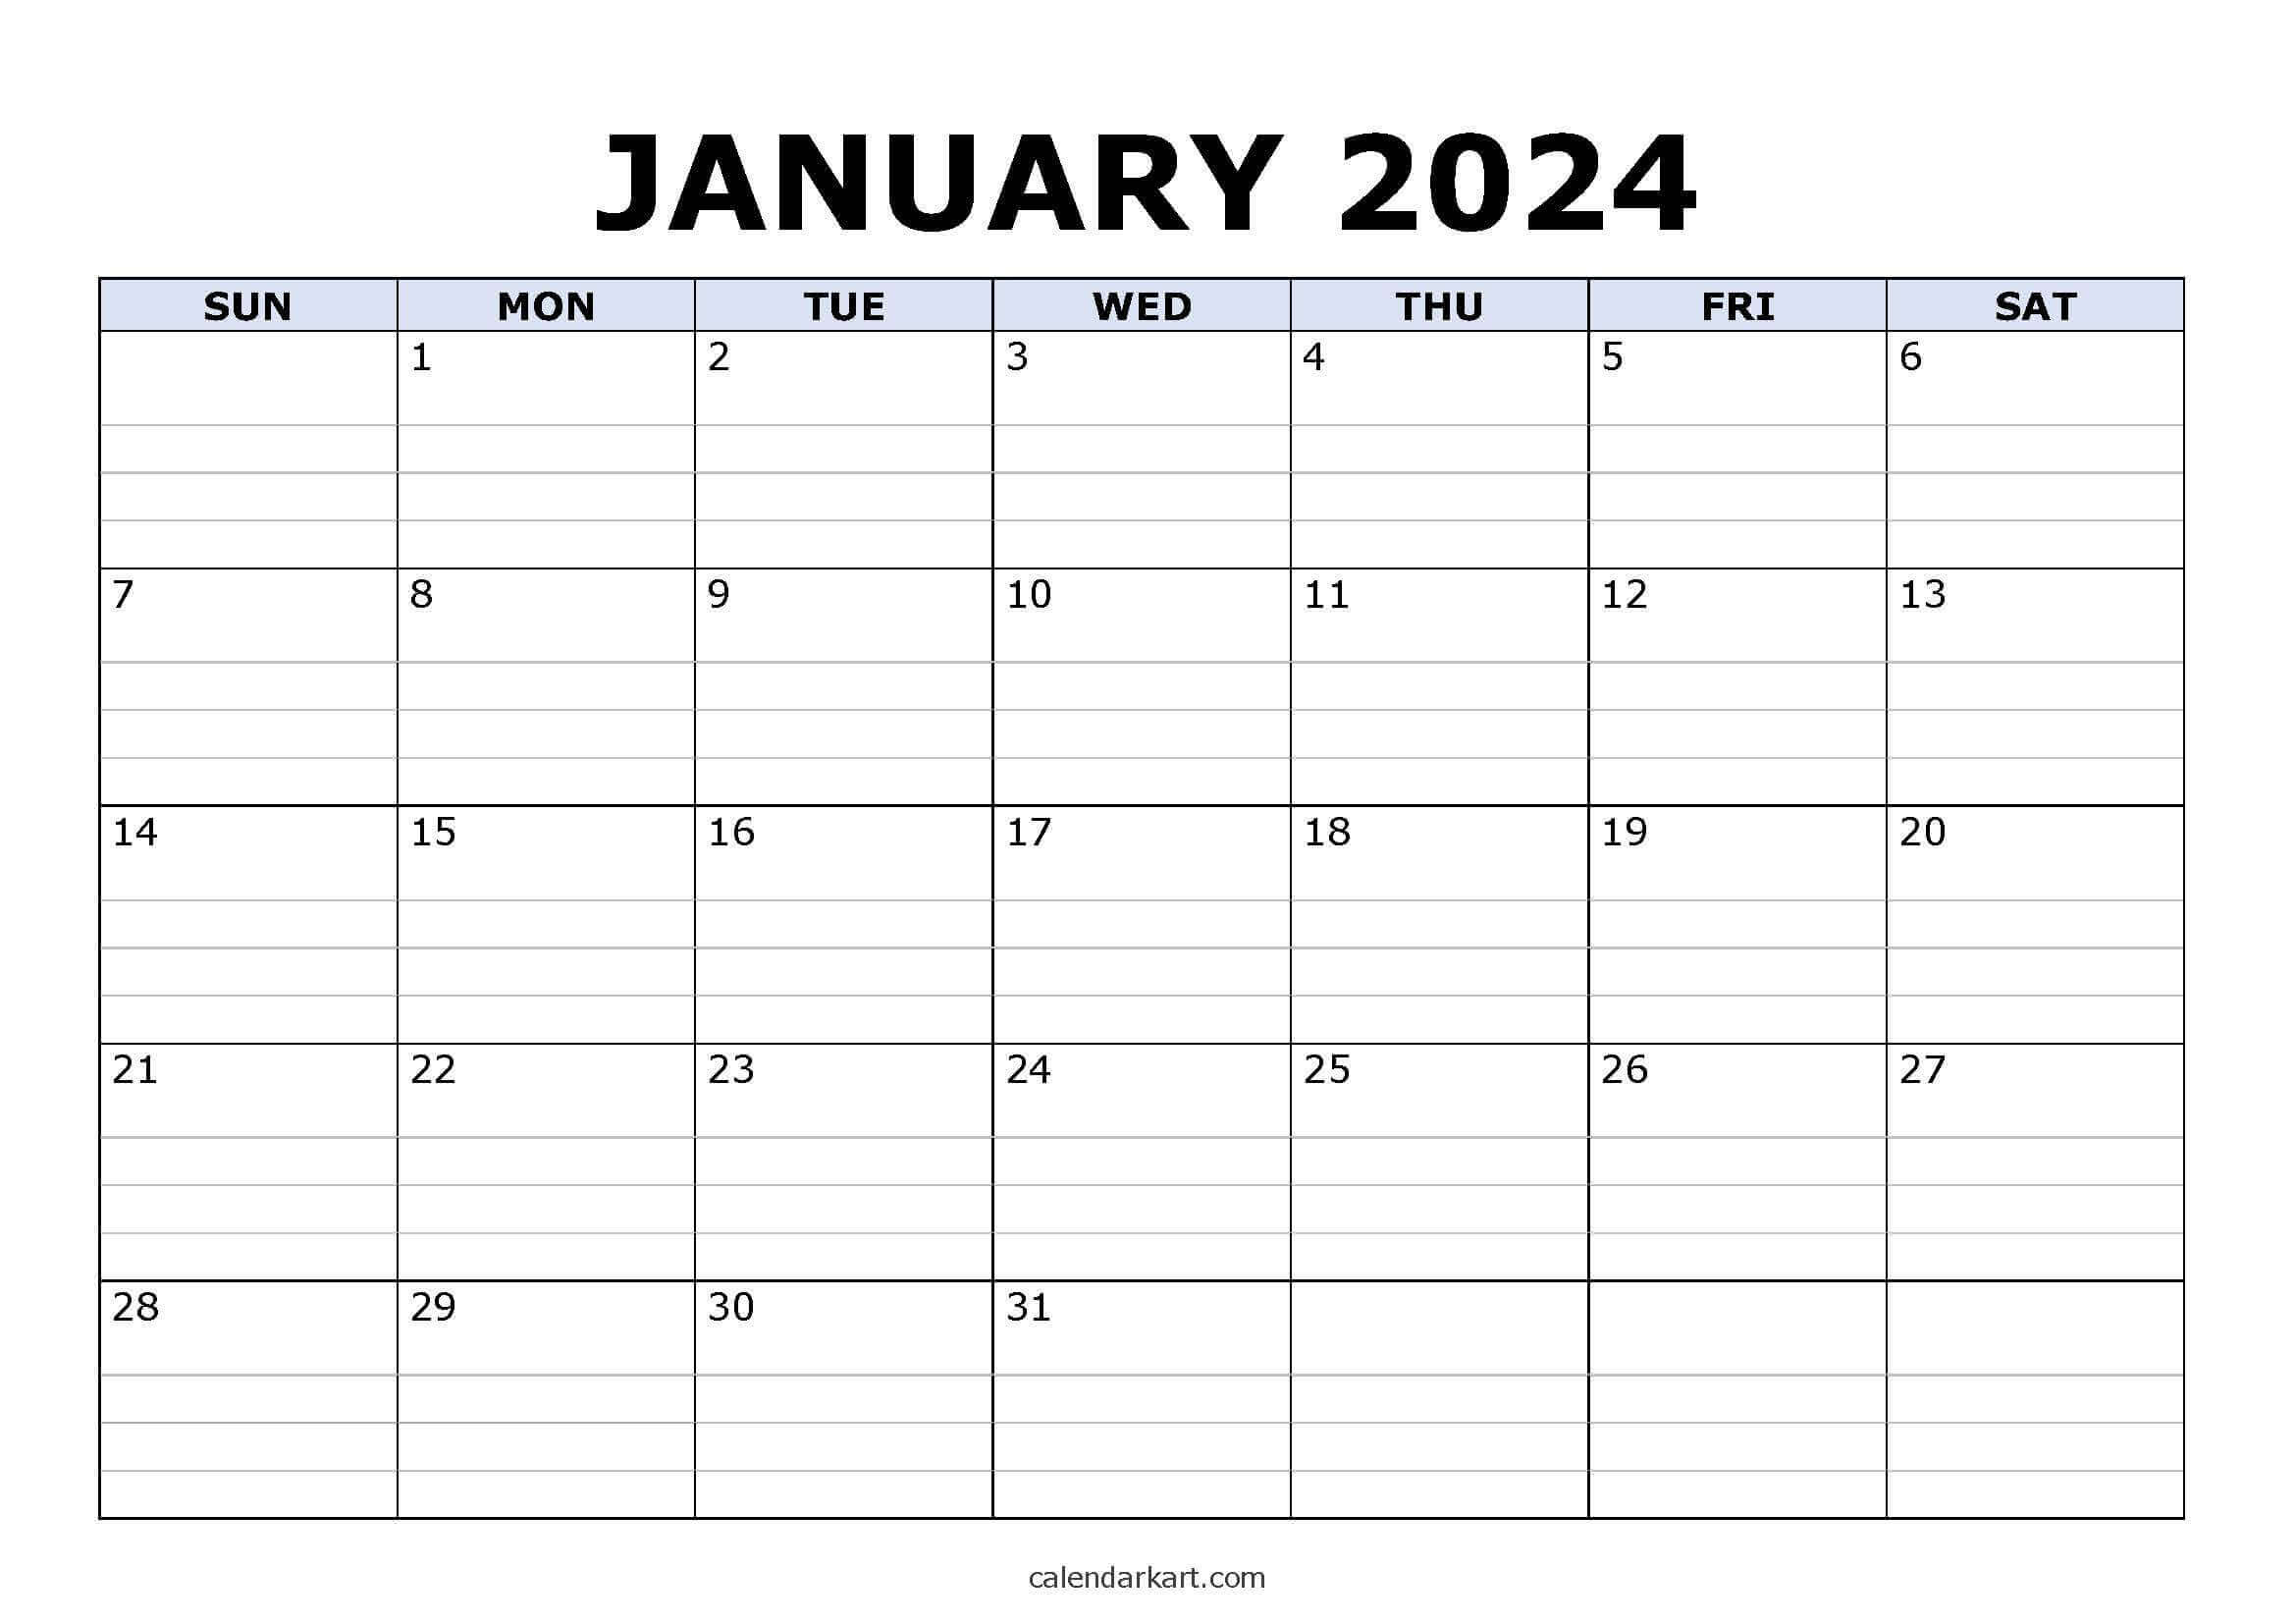 Free Printable January 2024 Calendars - Calendarkart | Printable Calendar 2024 With Lines